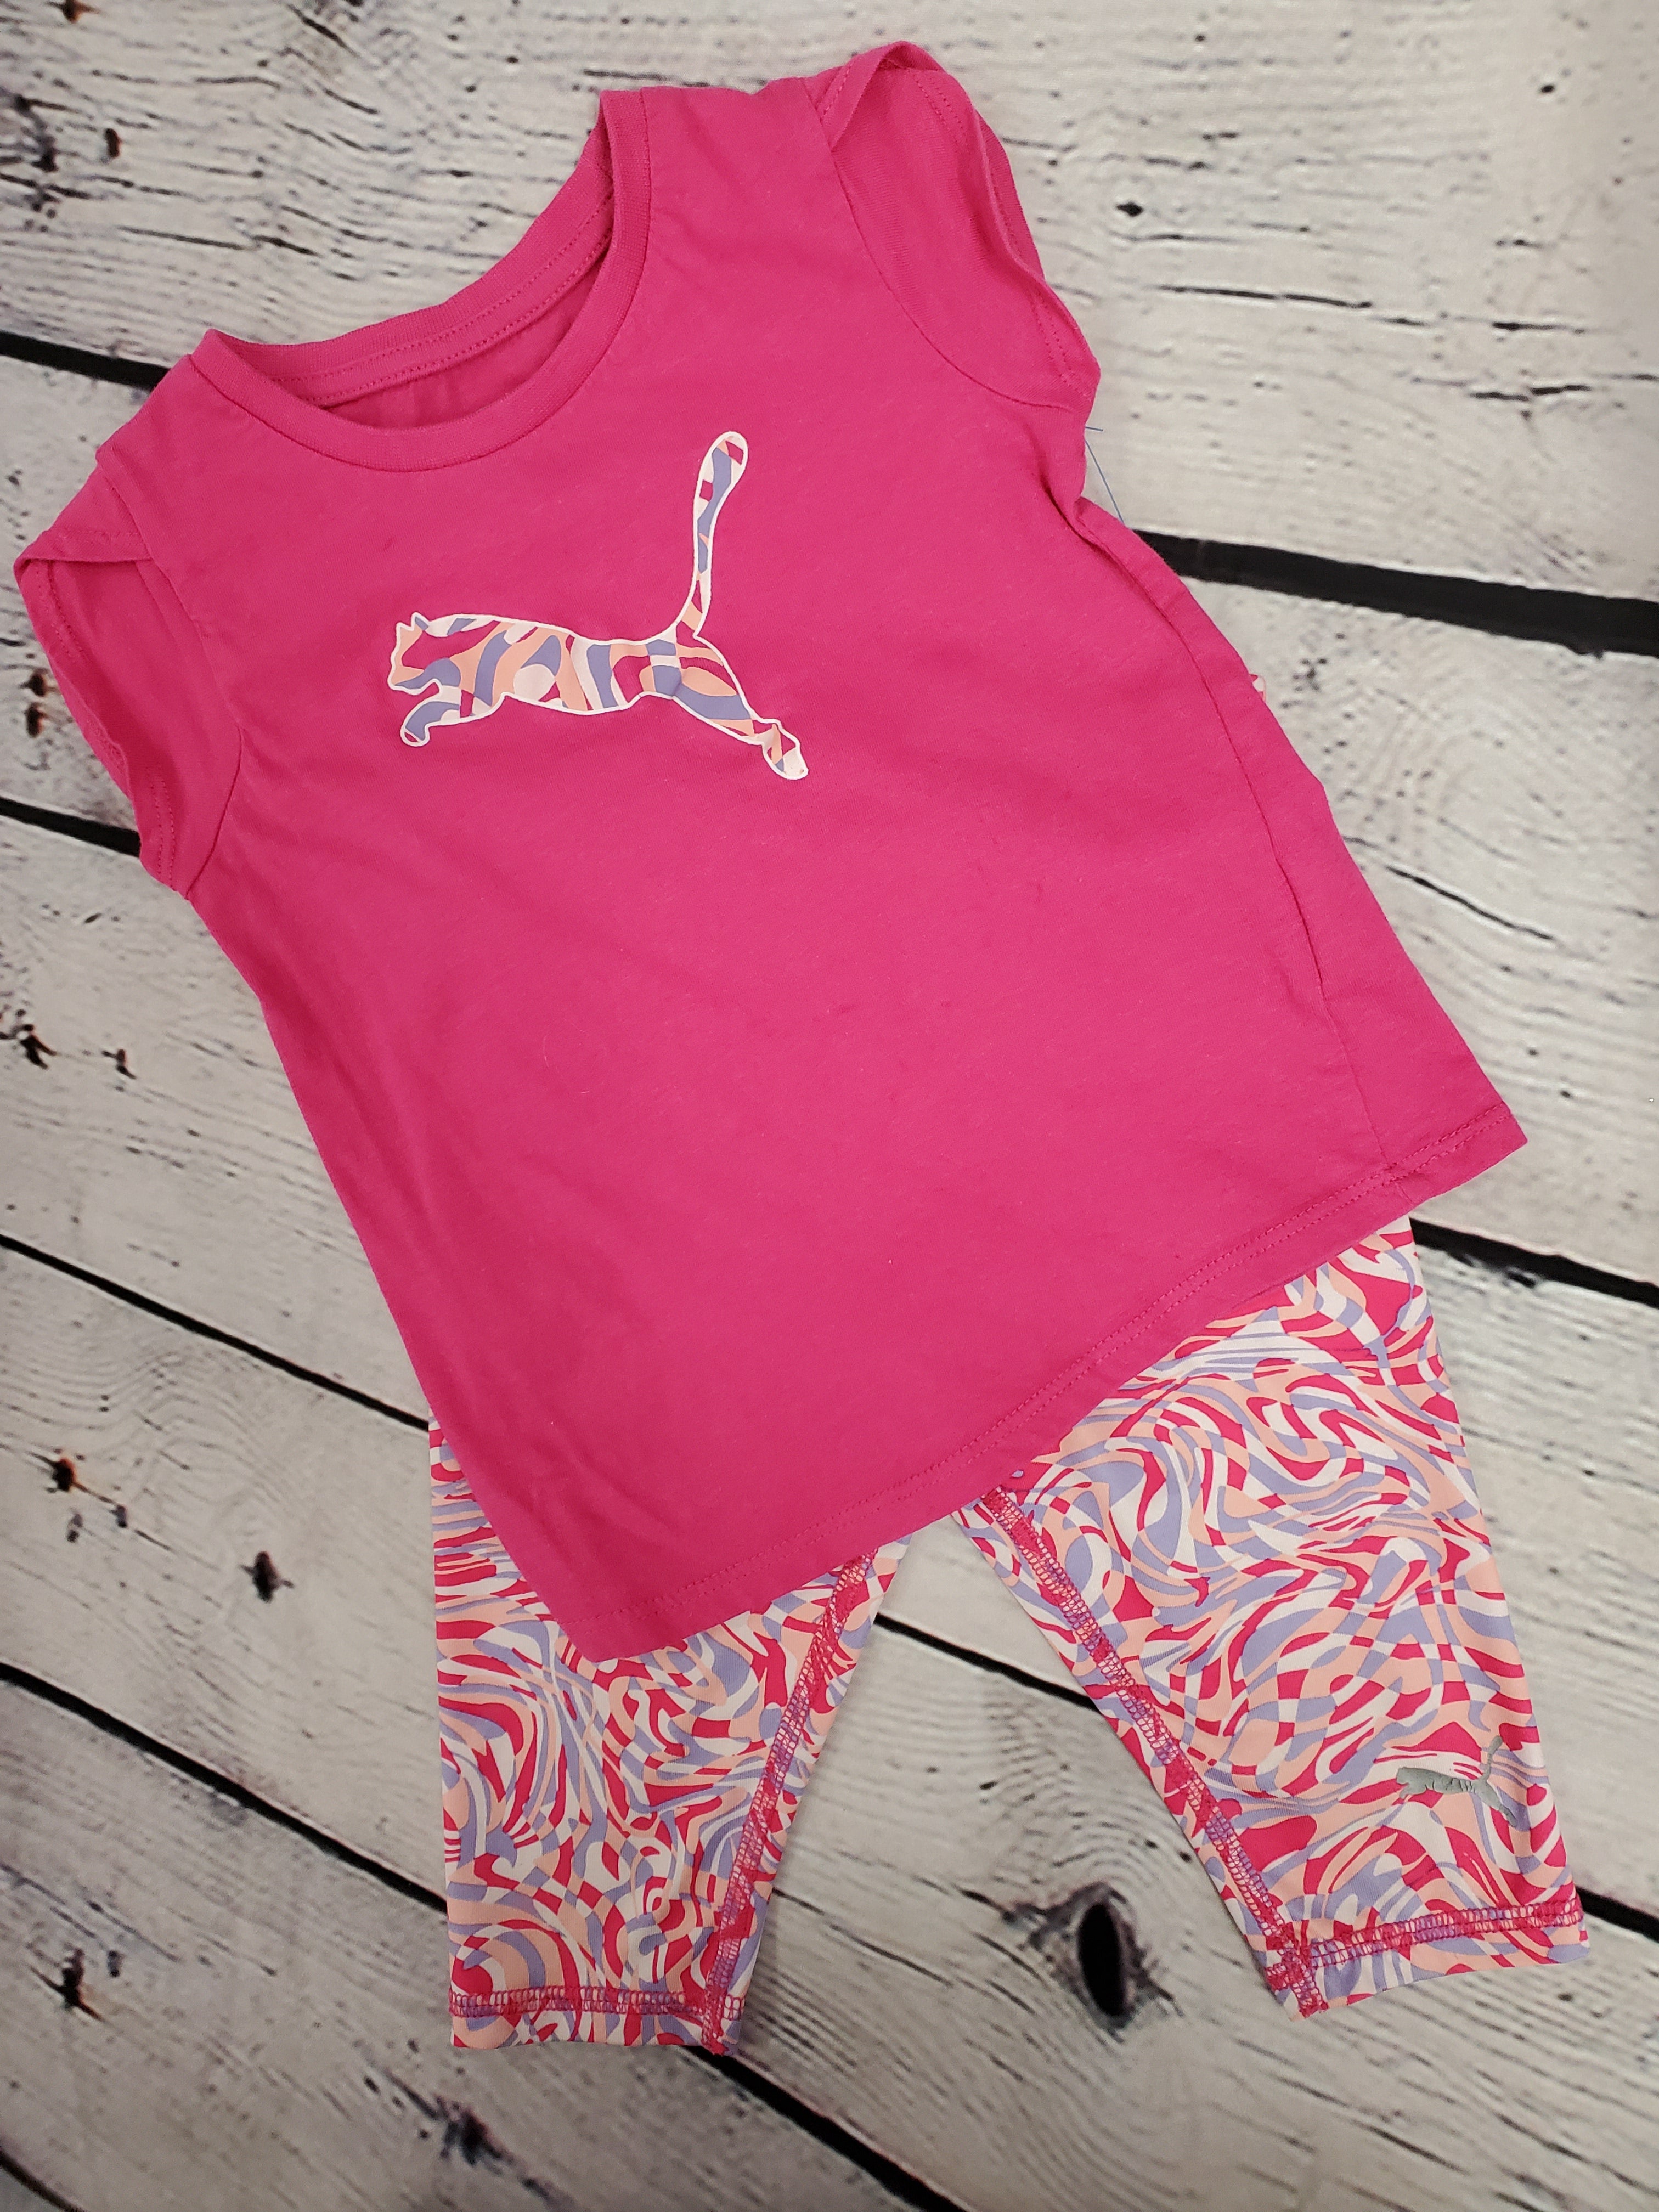 Puma girls 2pc set pink top with print Capris sz 24 months